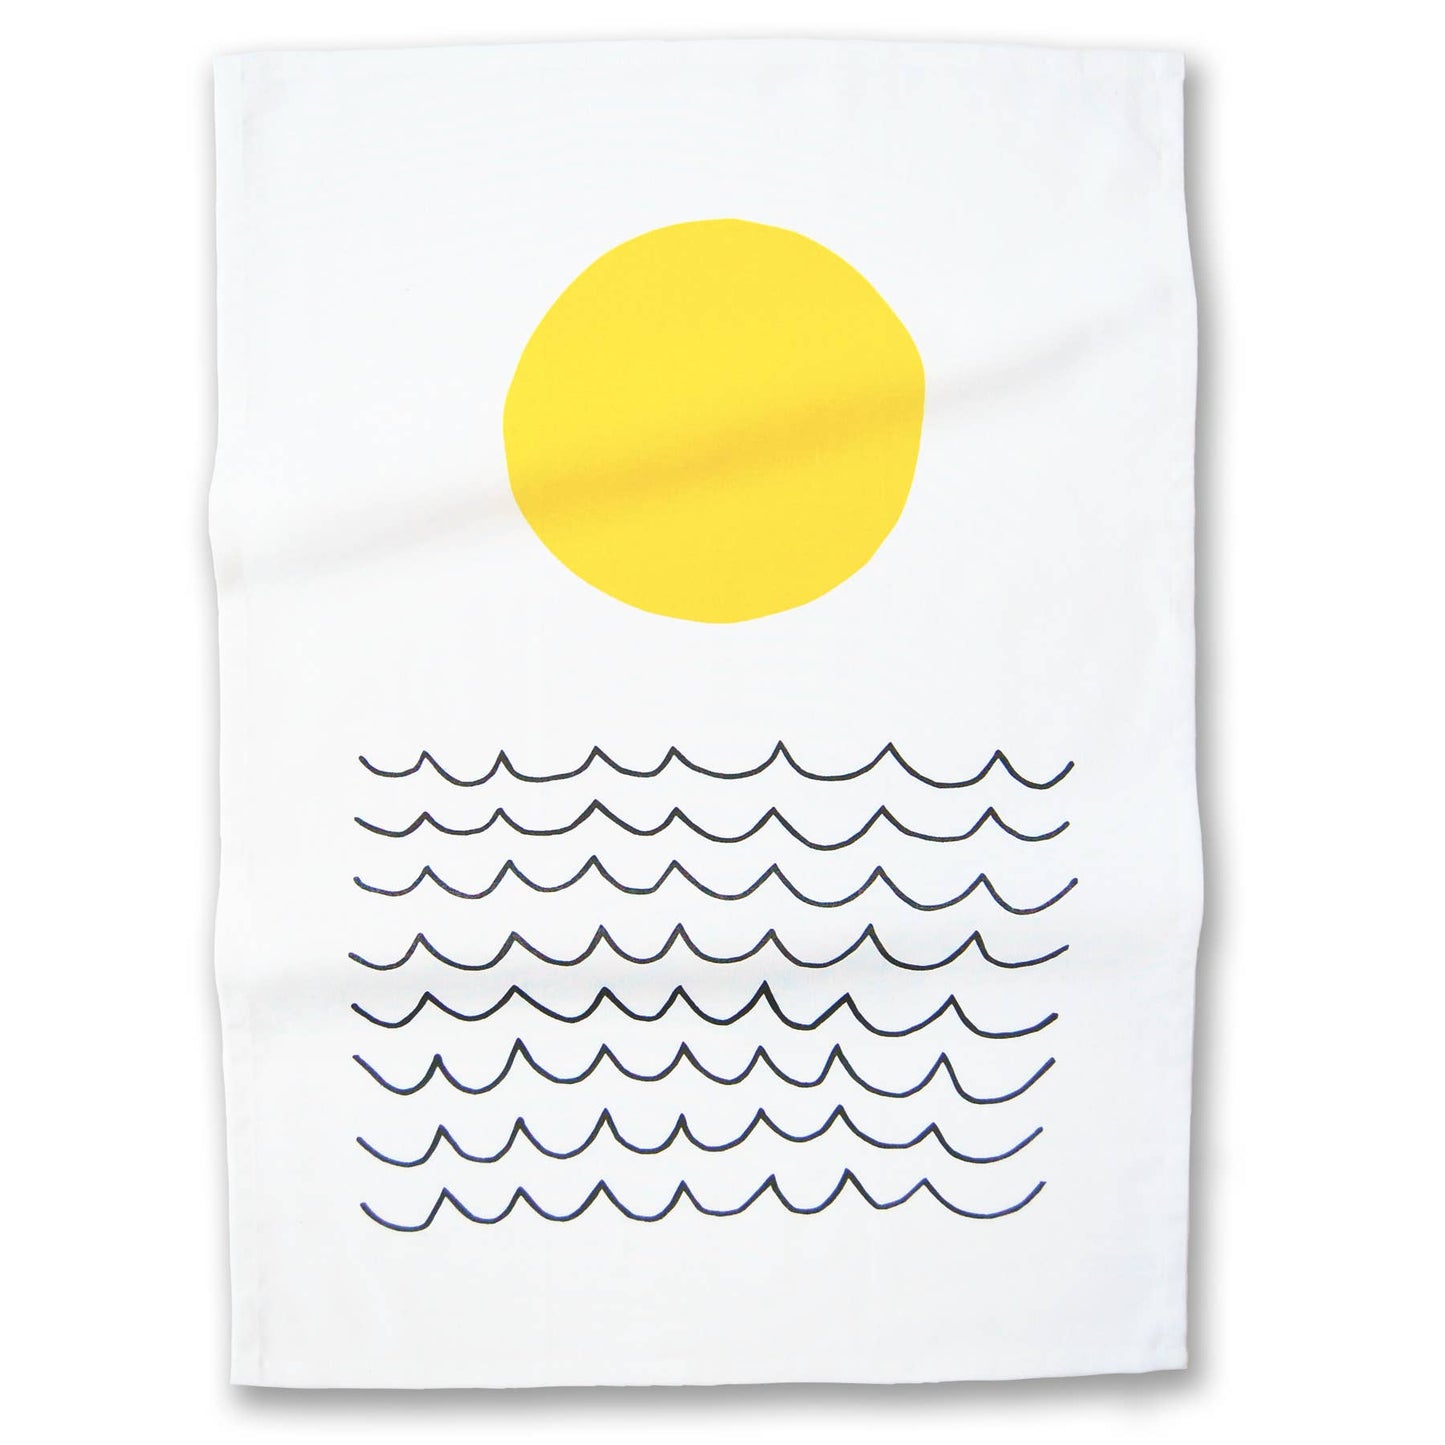 Badger & Burke - Sun and Waves Tea Towel